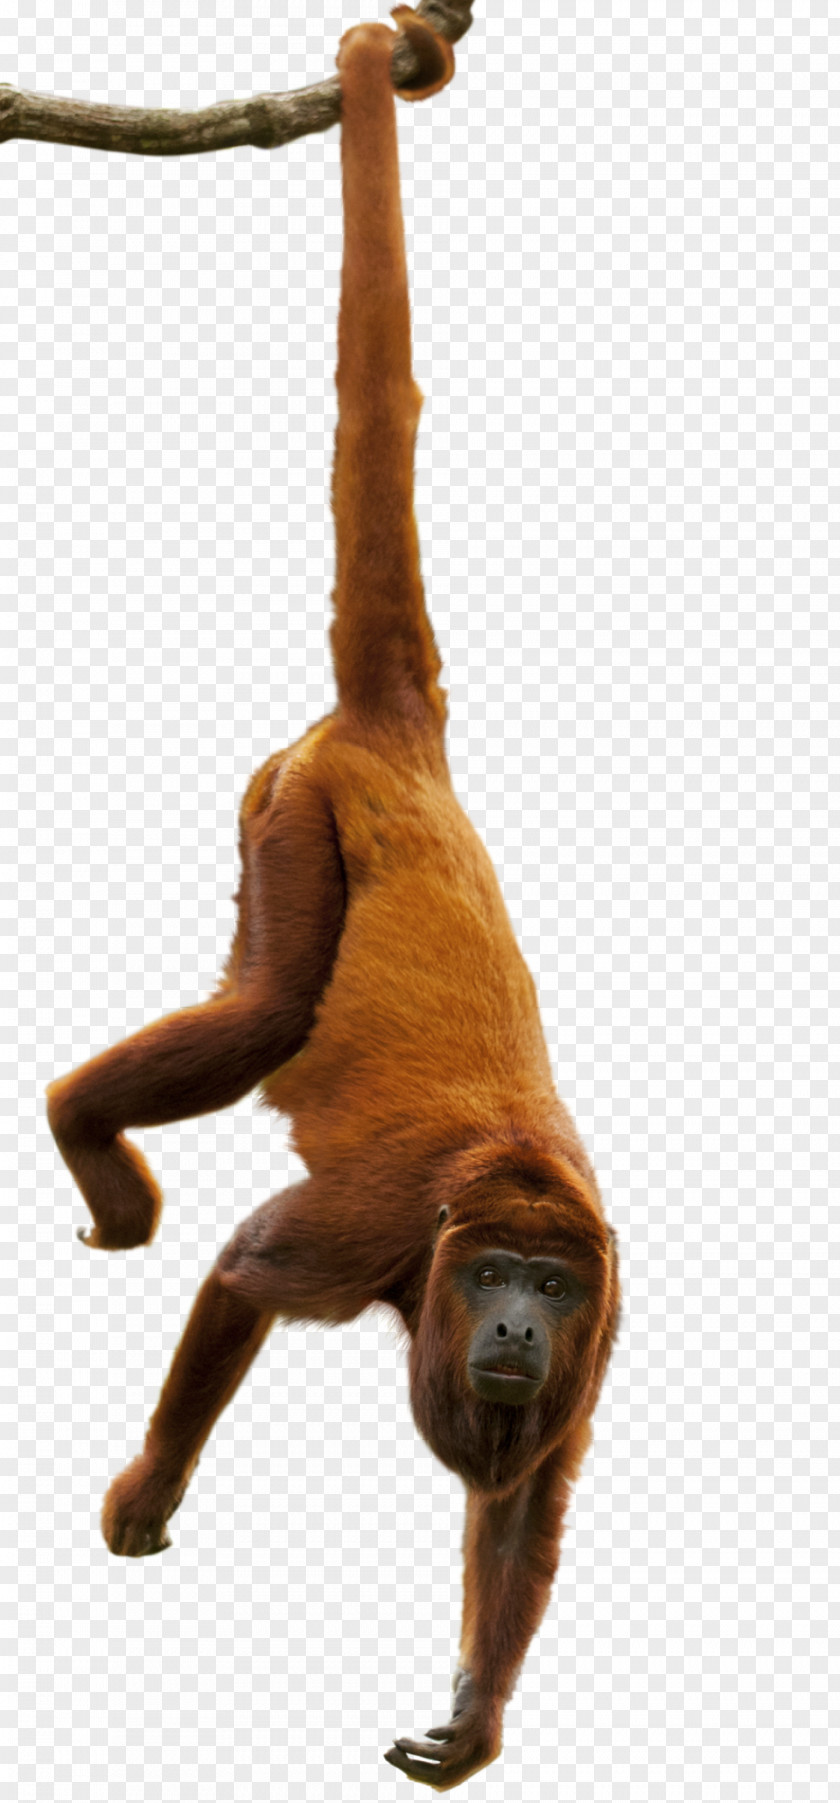 Gorilla Sloth Amazon Rainforest Orangutan Primate Great Apes PNG